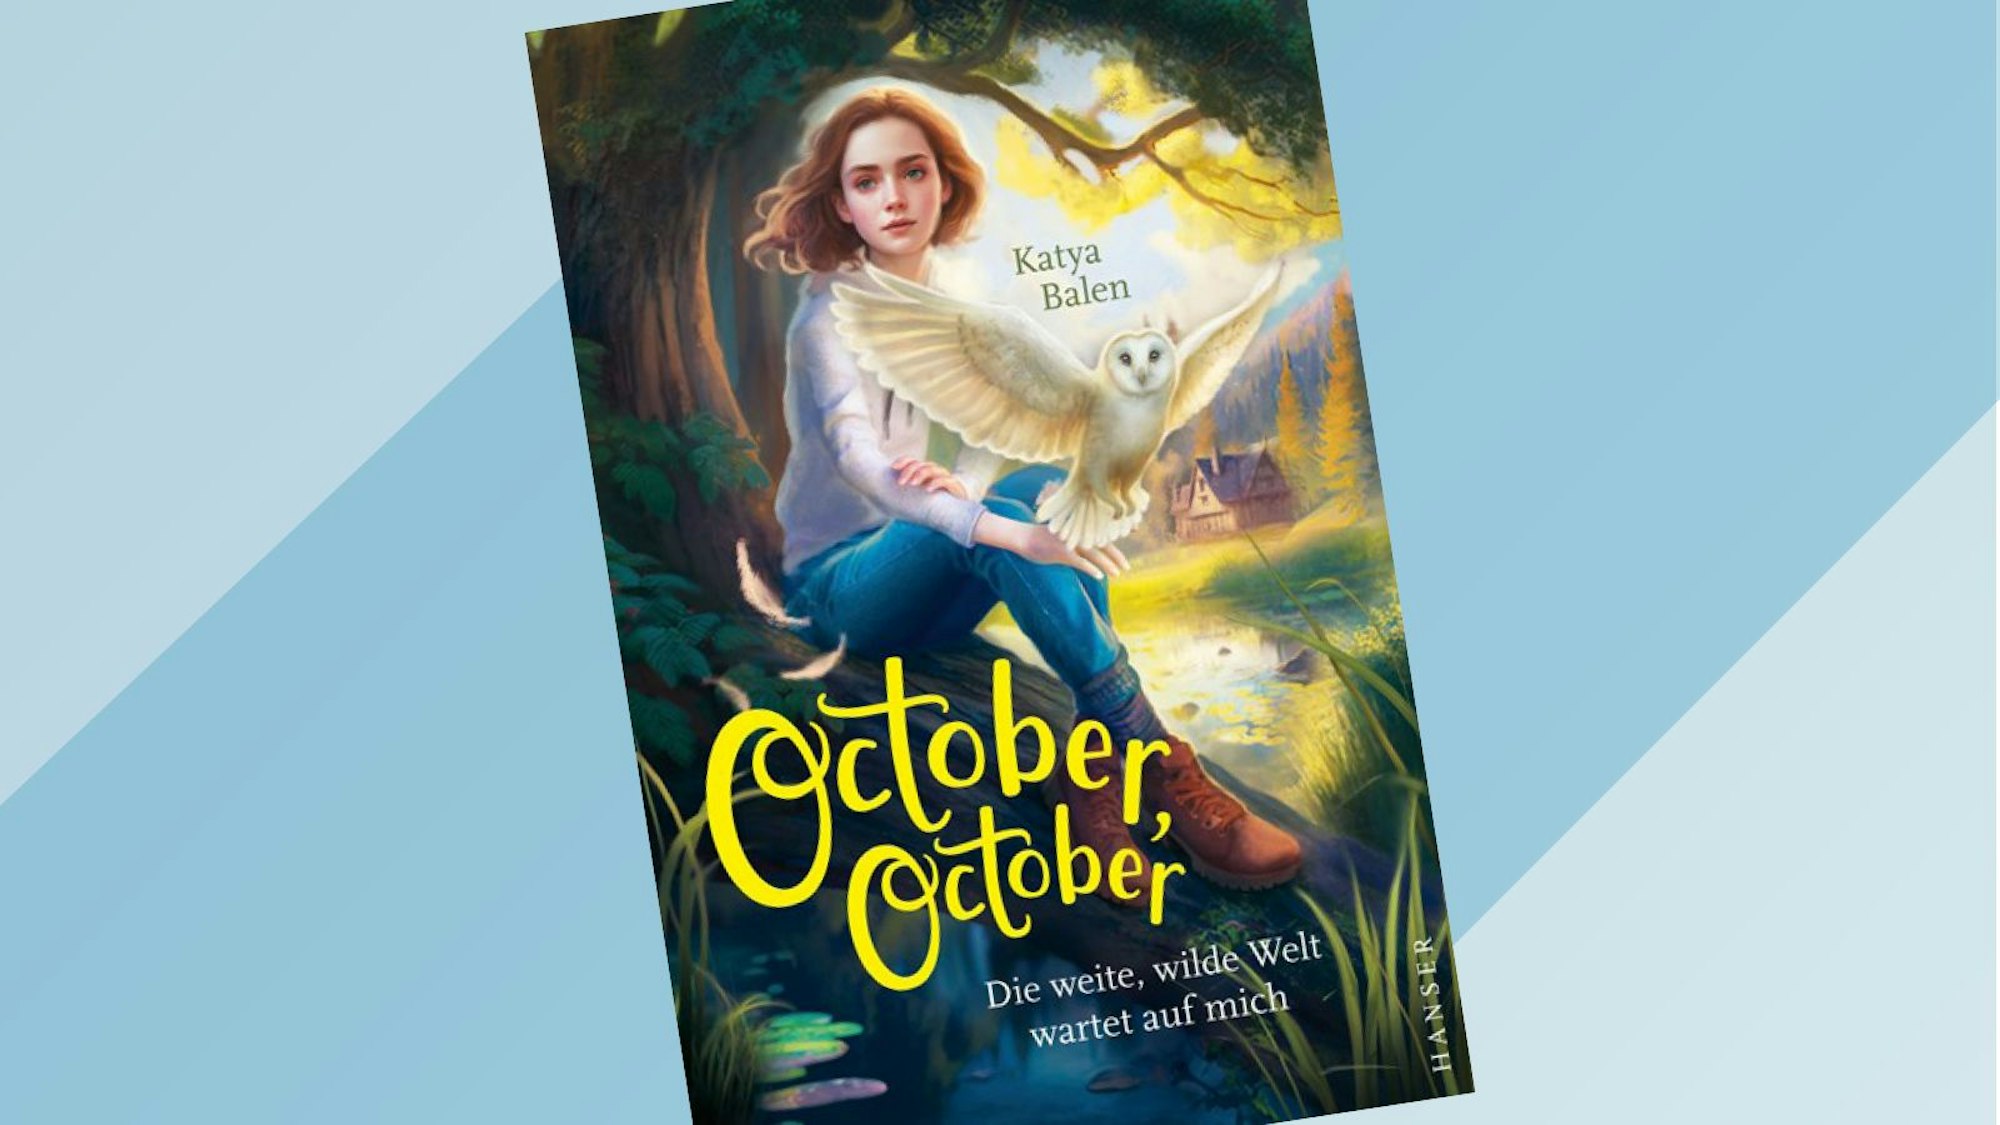 Buchcover "October, October", erschienen im Hanser Verlag